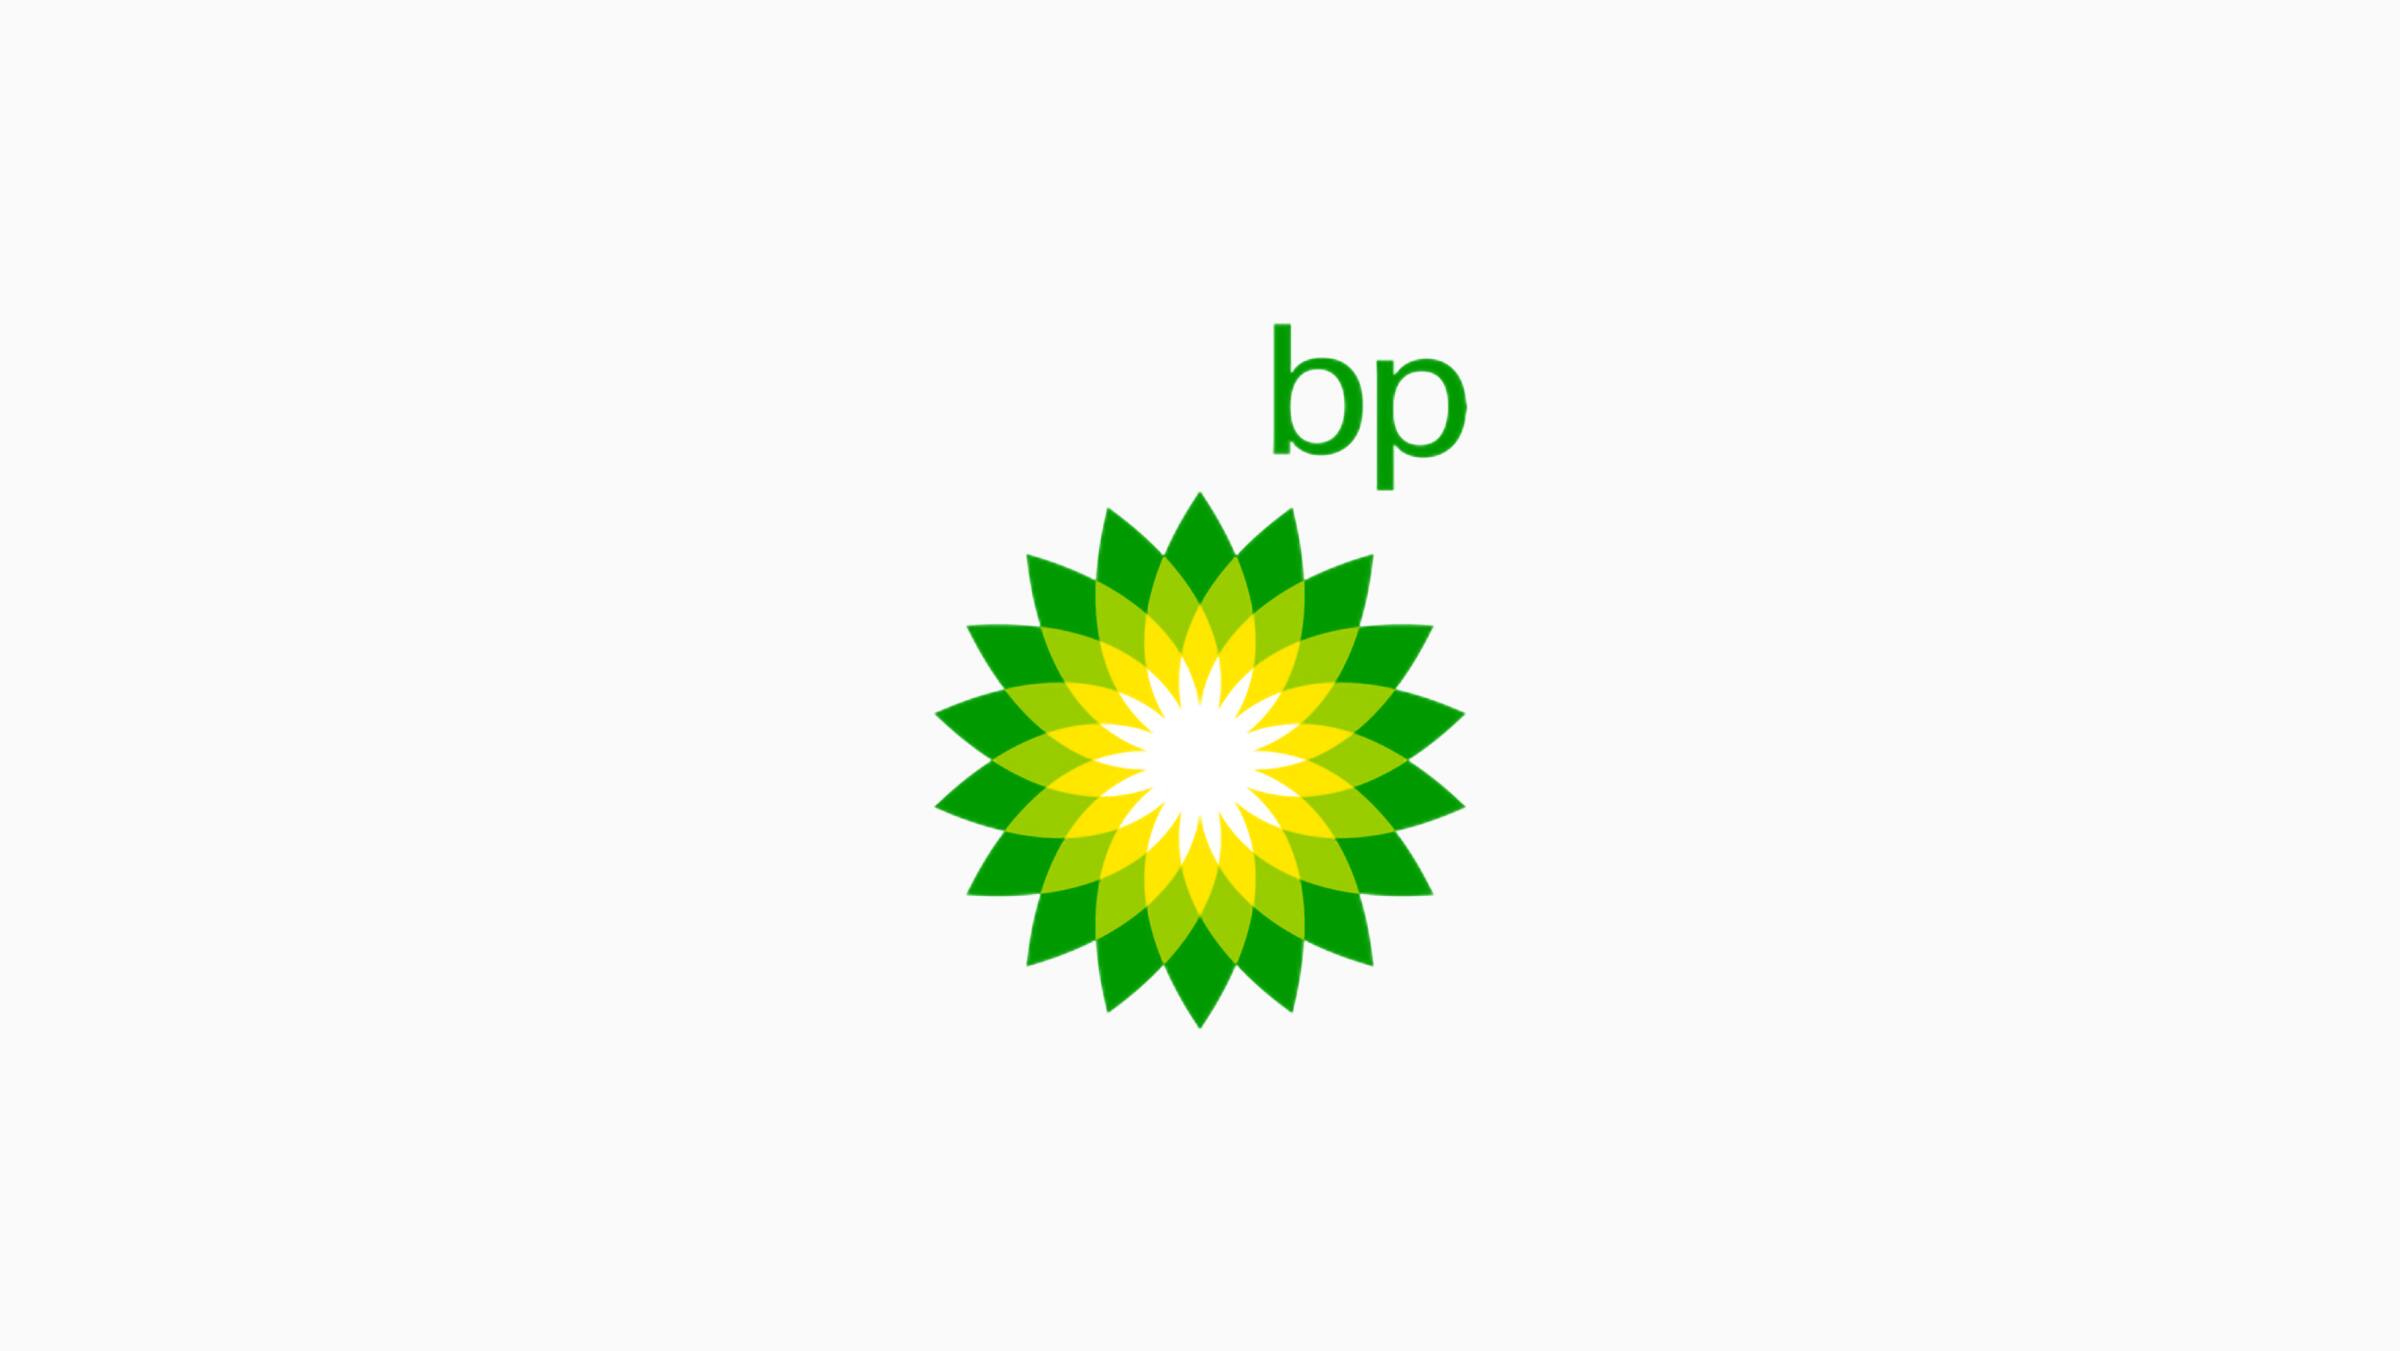 The BP New Zealand logo